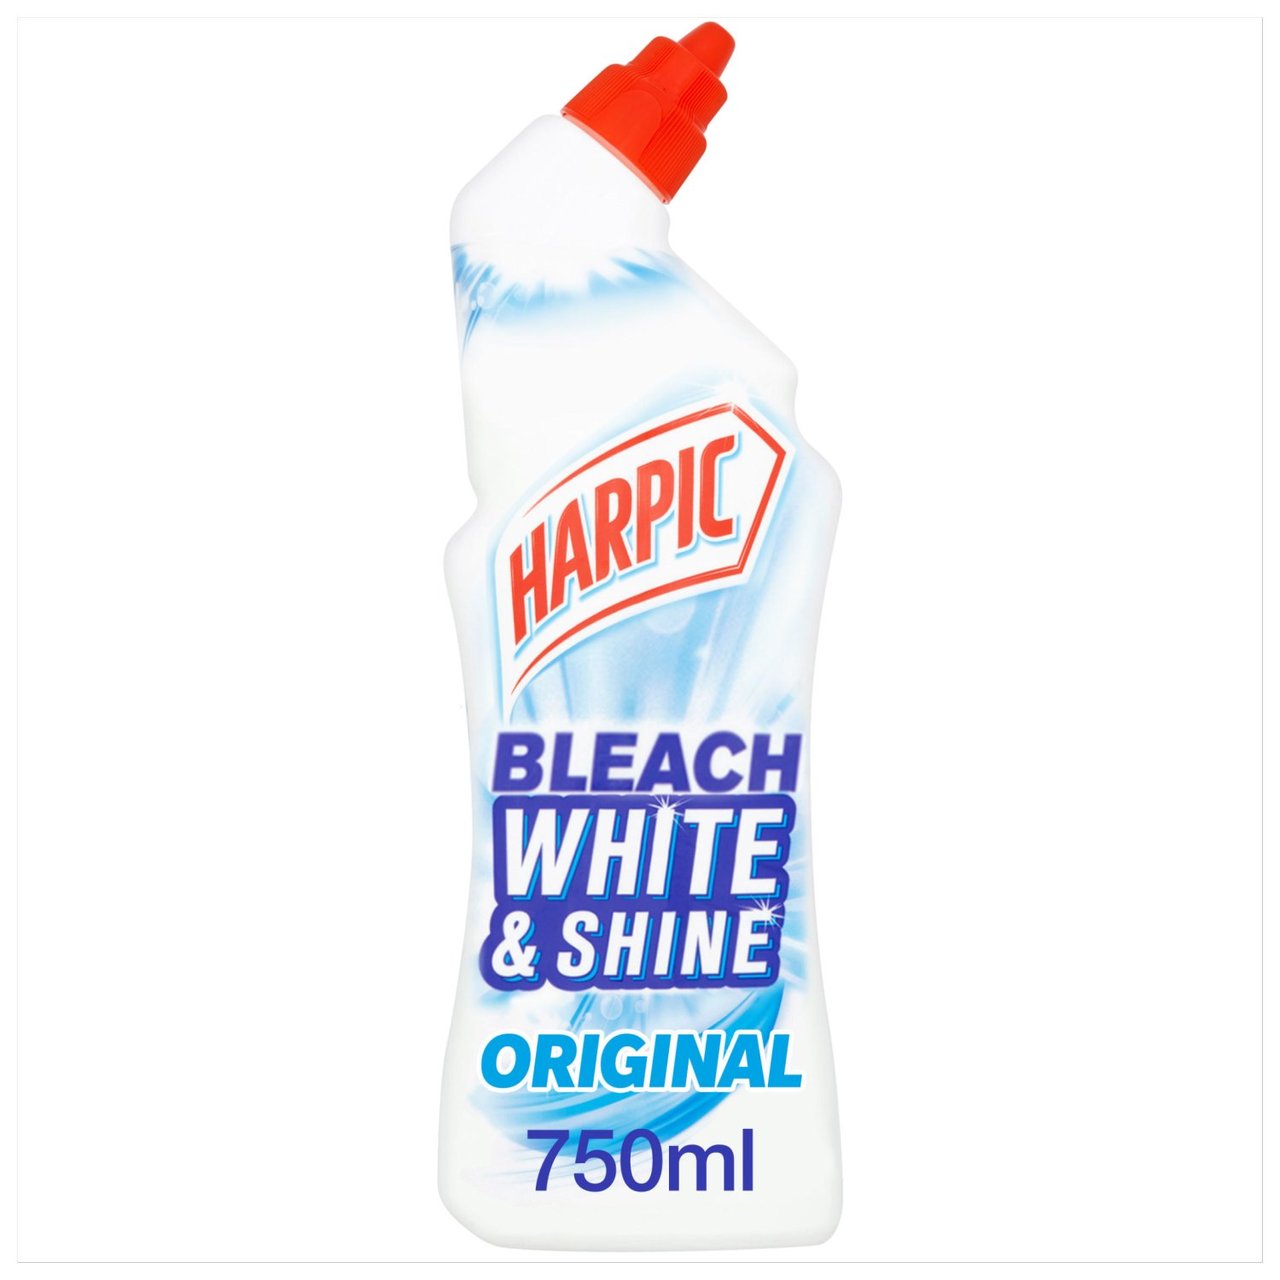 Harpic Bleach White Shine 750ml*